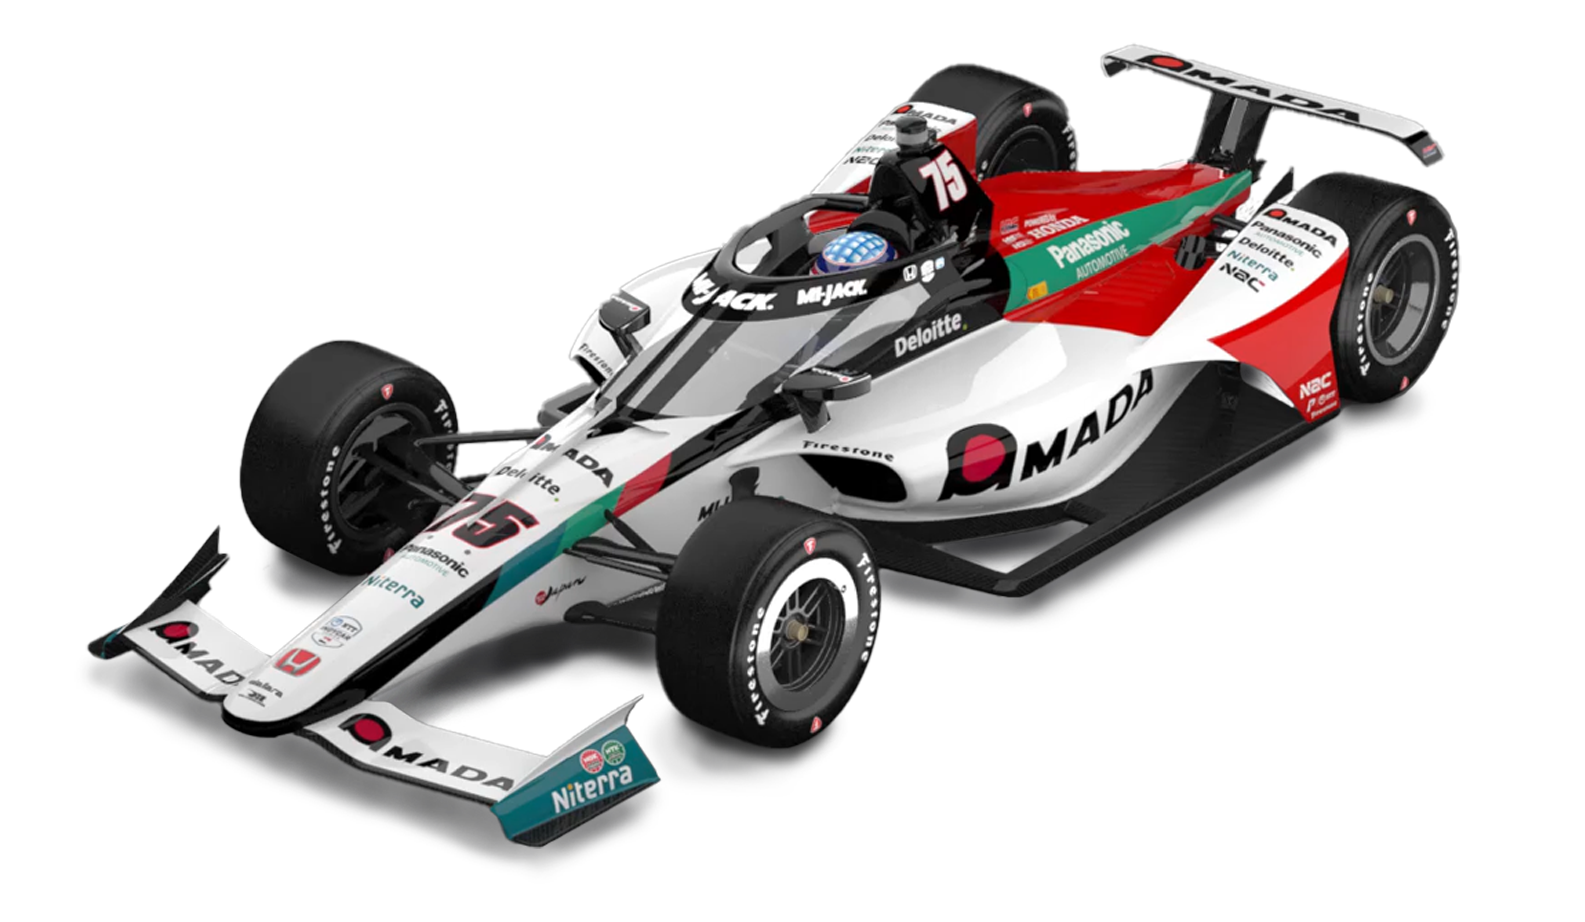 AMADA Indy 500 car Featured